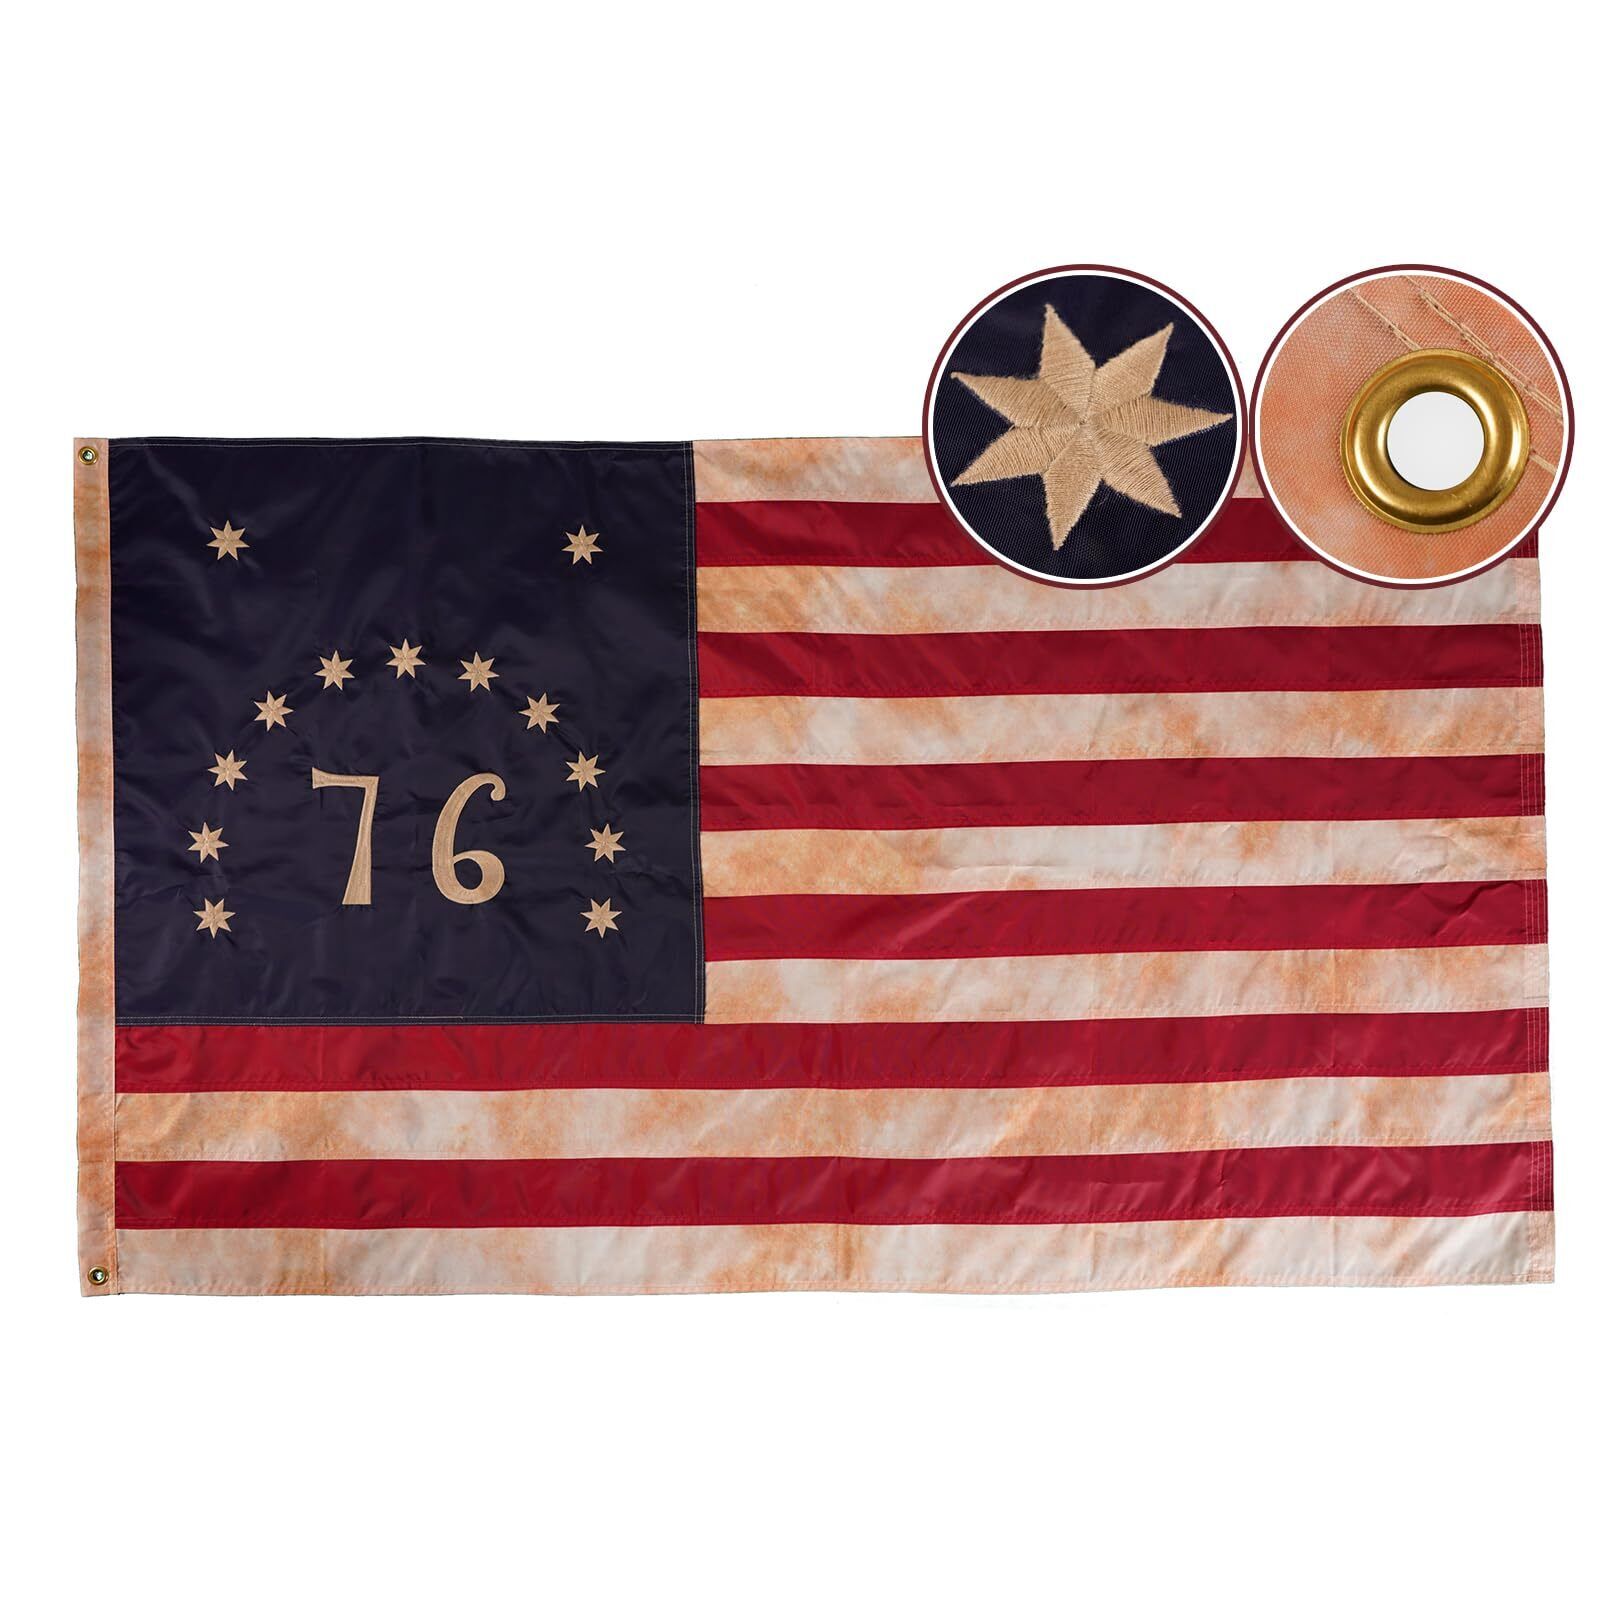 Vintage Bennington 1776 Flag 3x5 Feet for Outside Made in USA, Heavy Duty Emb...